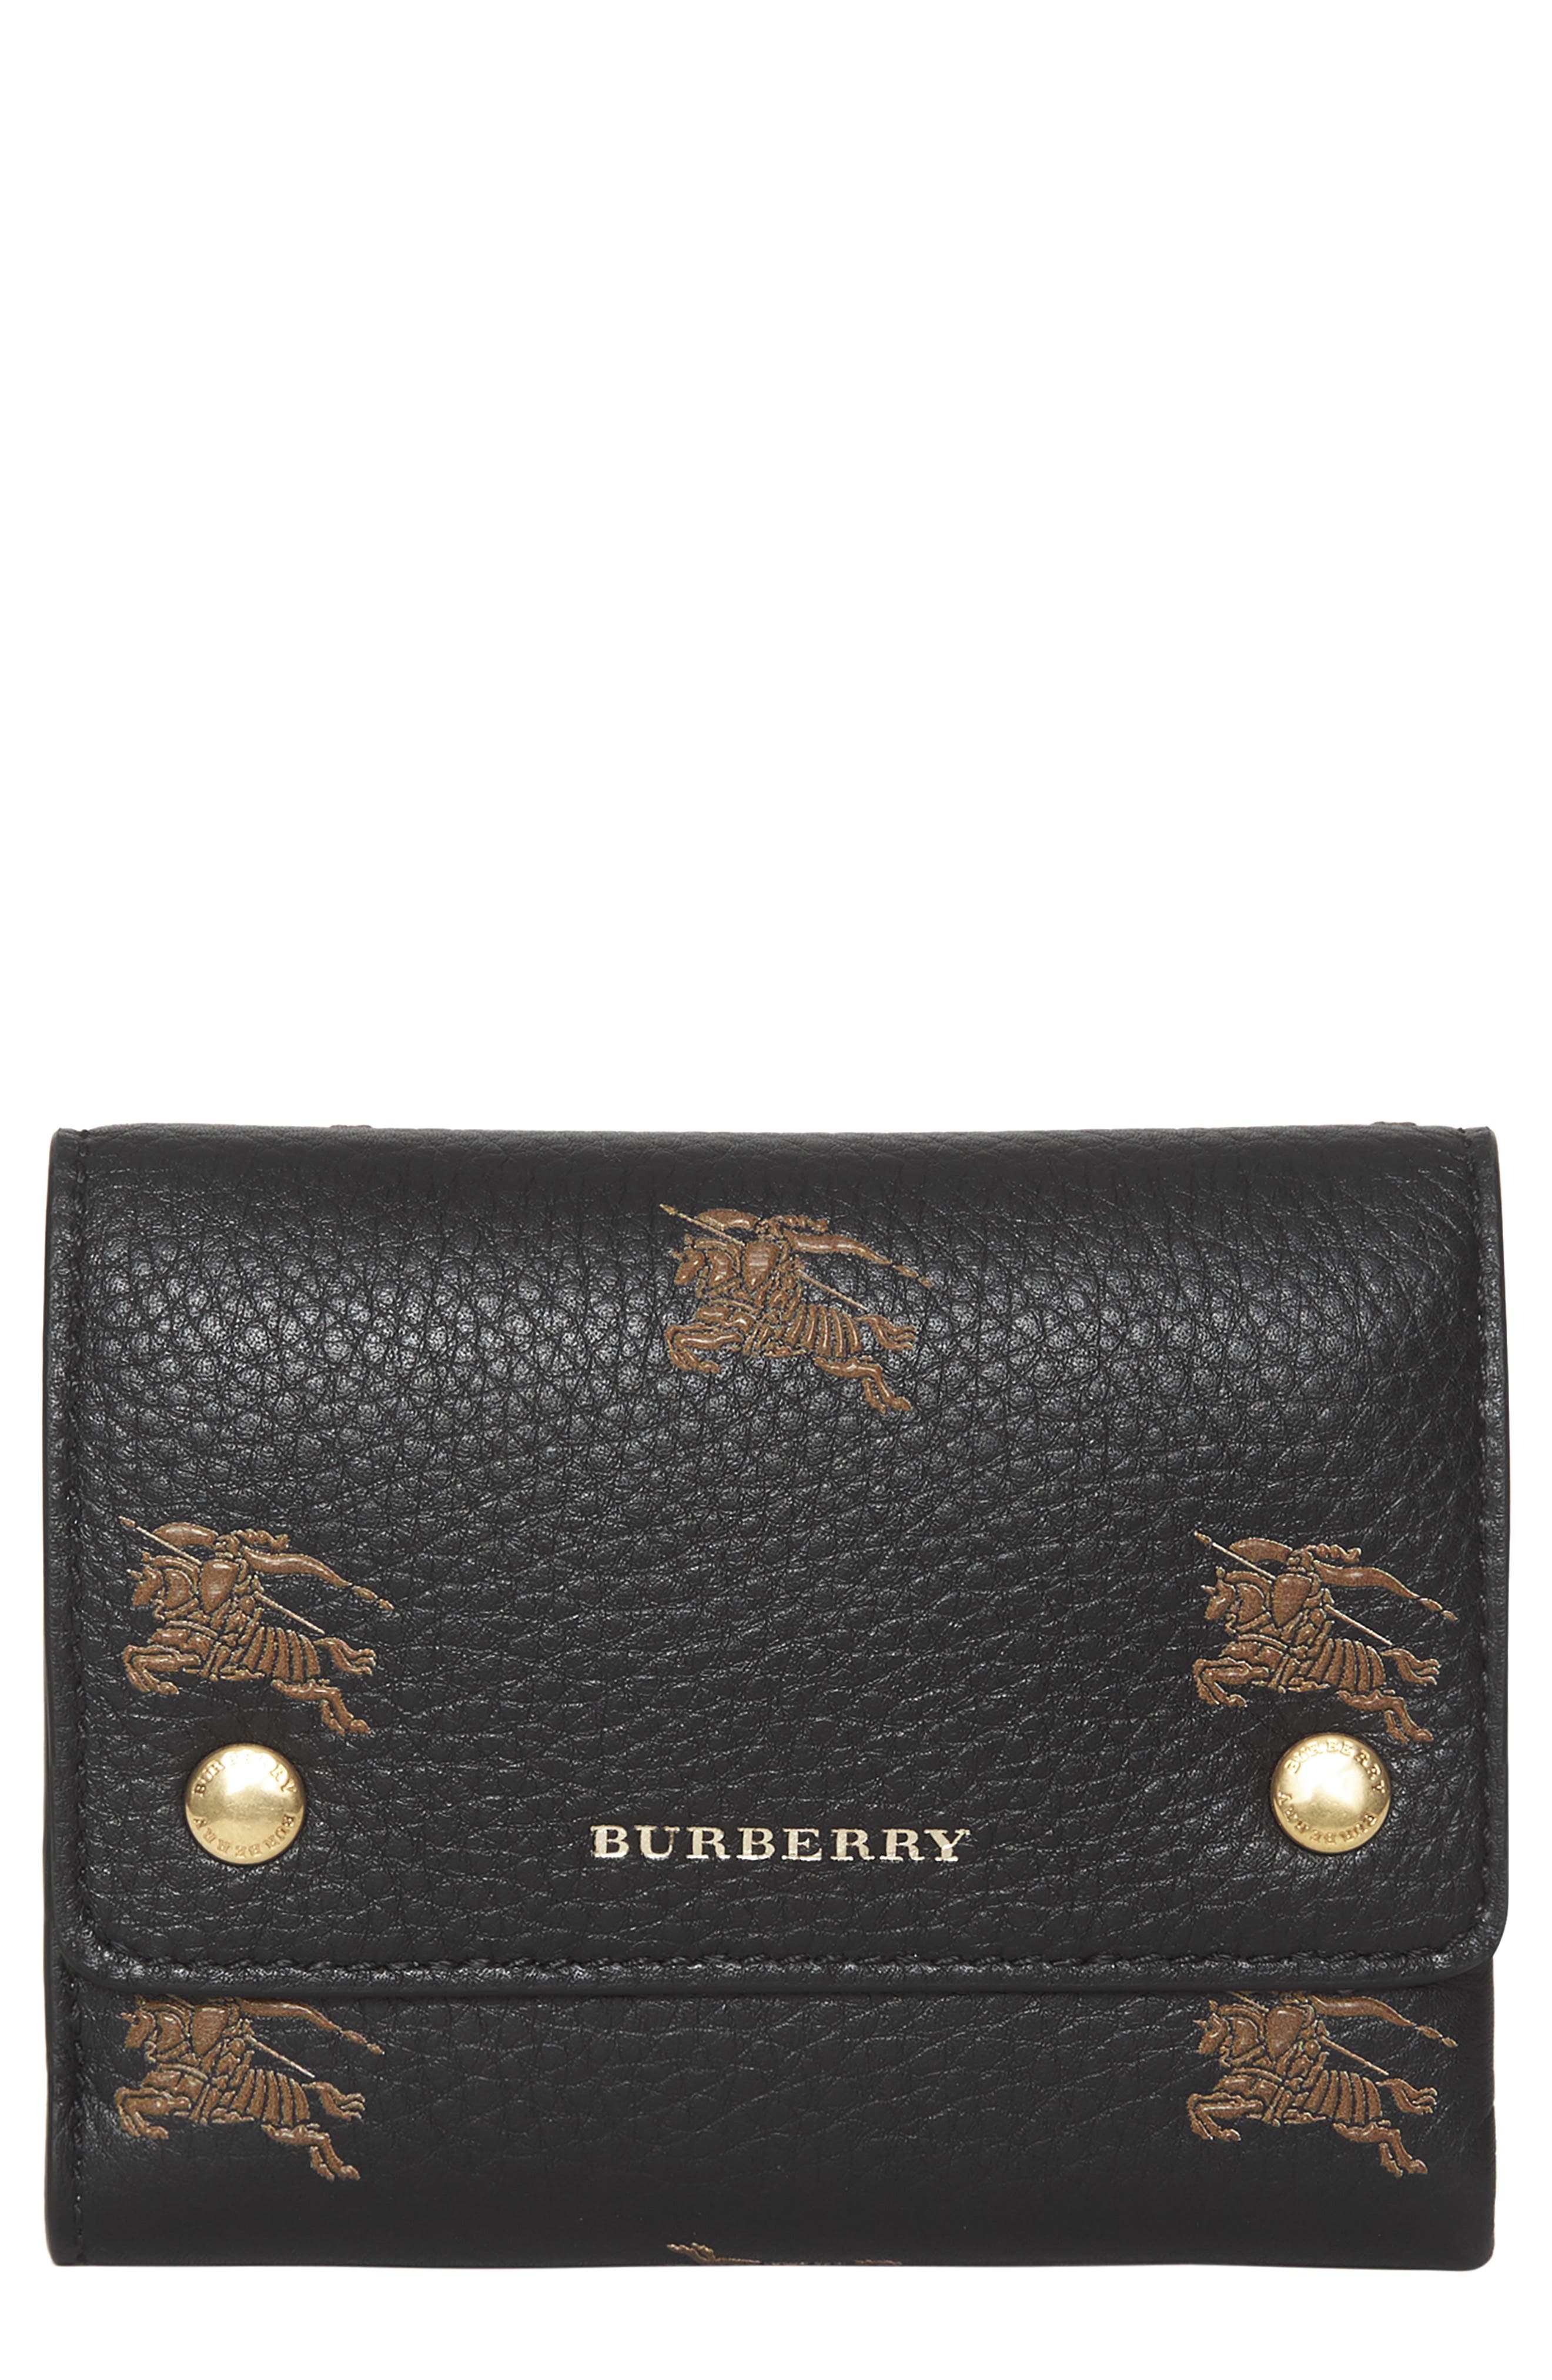 burberry flap wallet